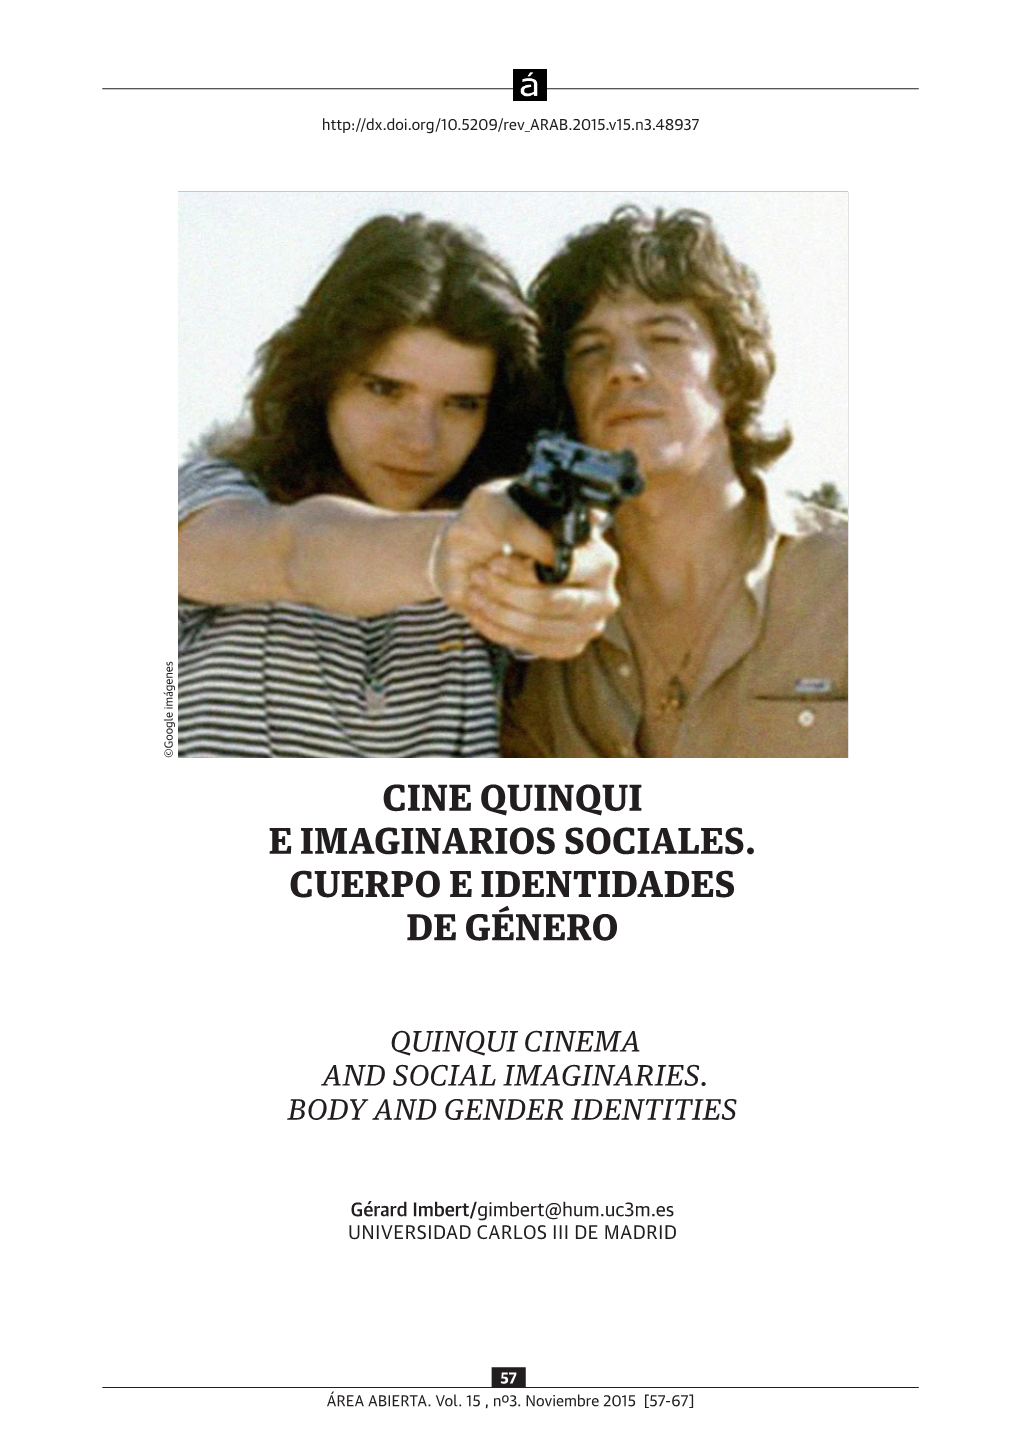 Cine Quinqui E Imaginarios Sociales. Cuerpo E Identidades De Género